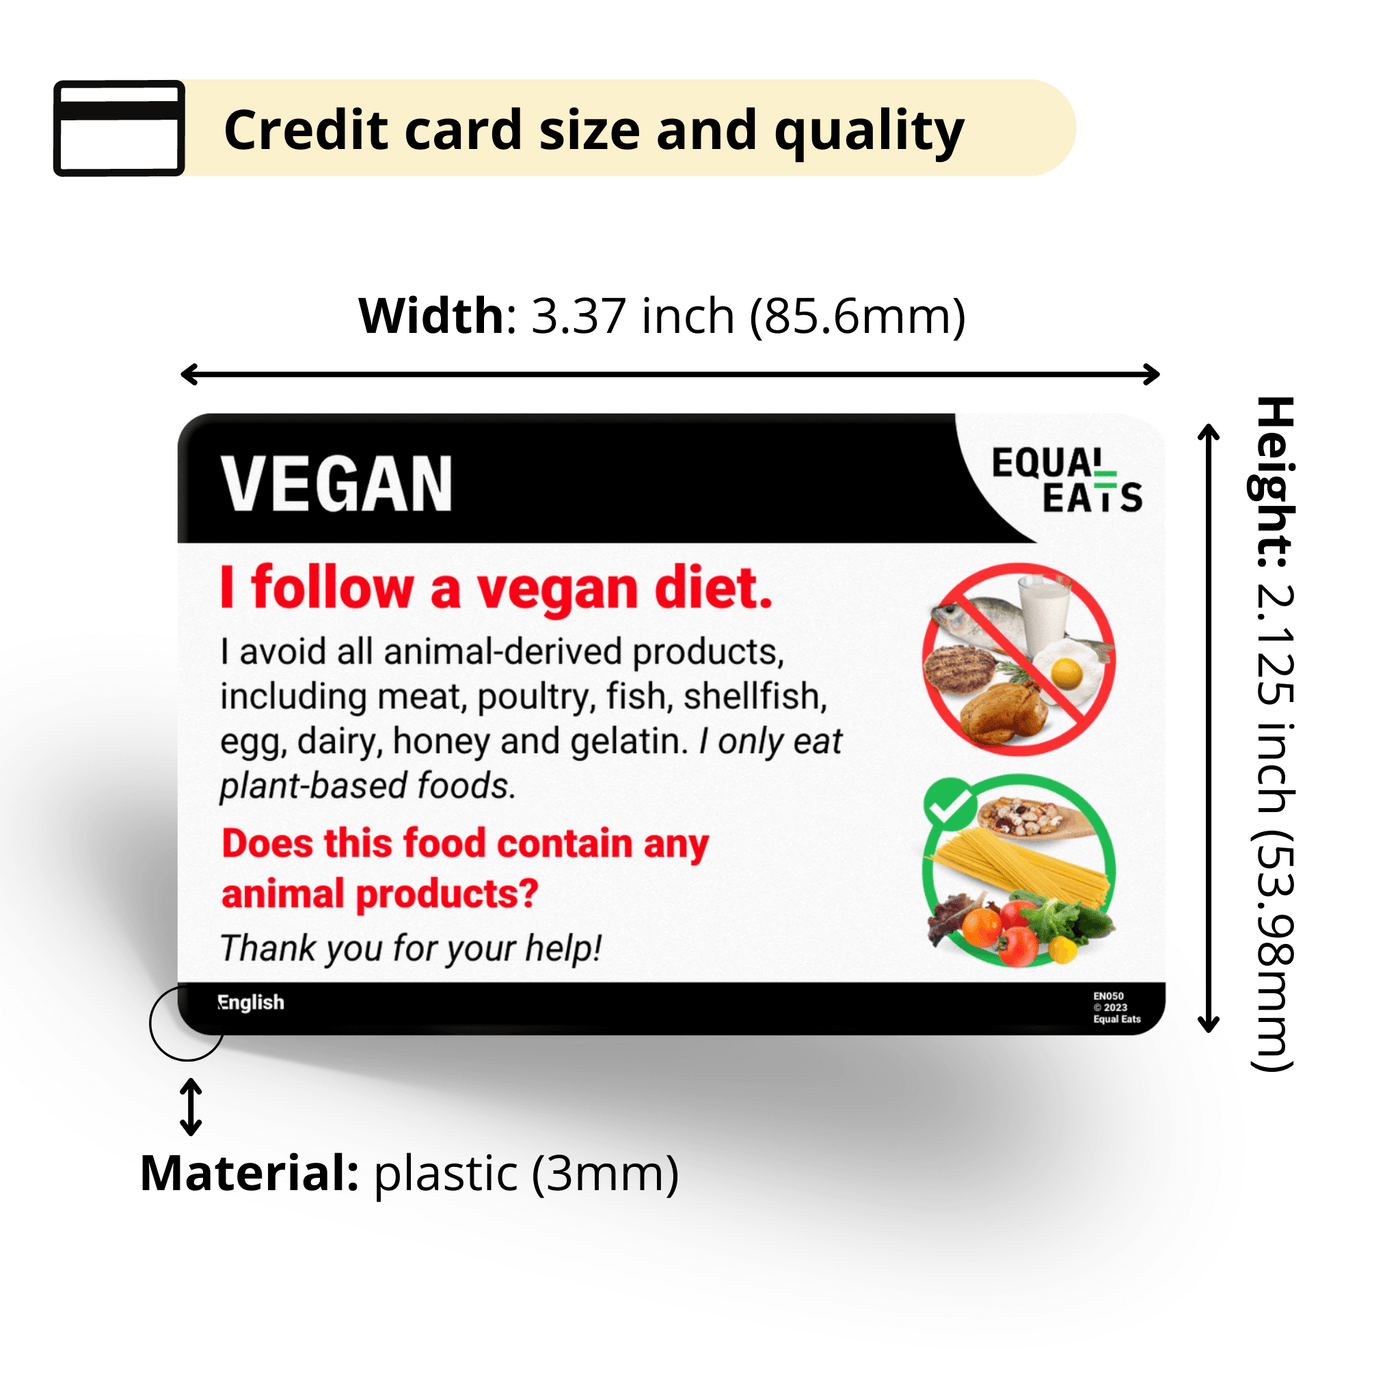 Dutch (Netherlands) Vegan Card